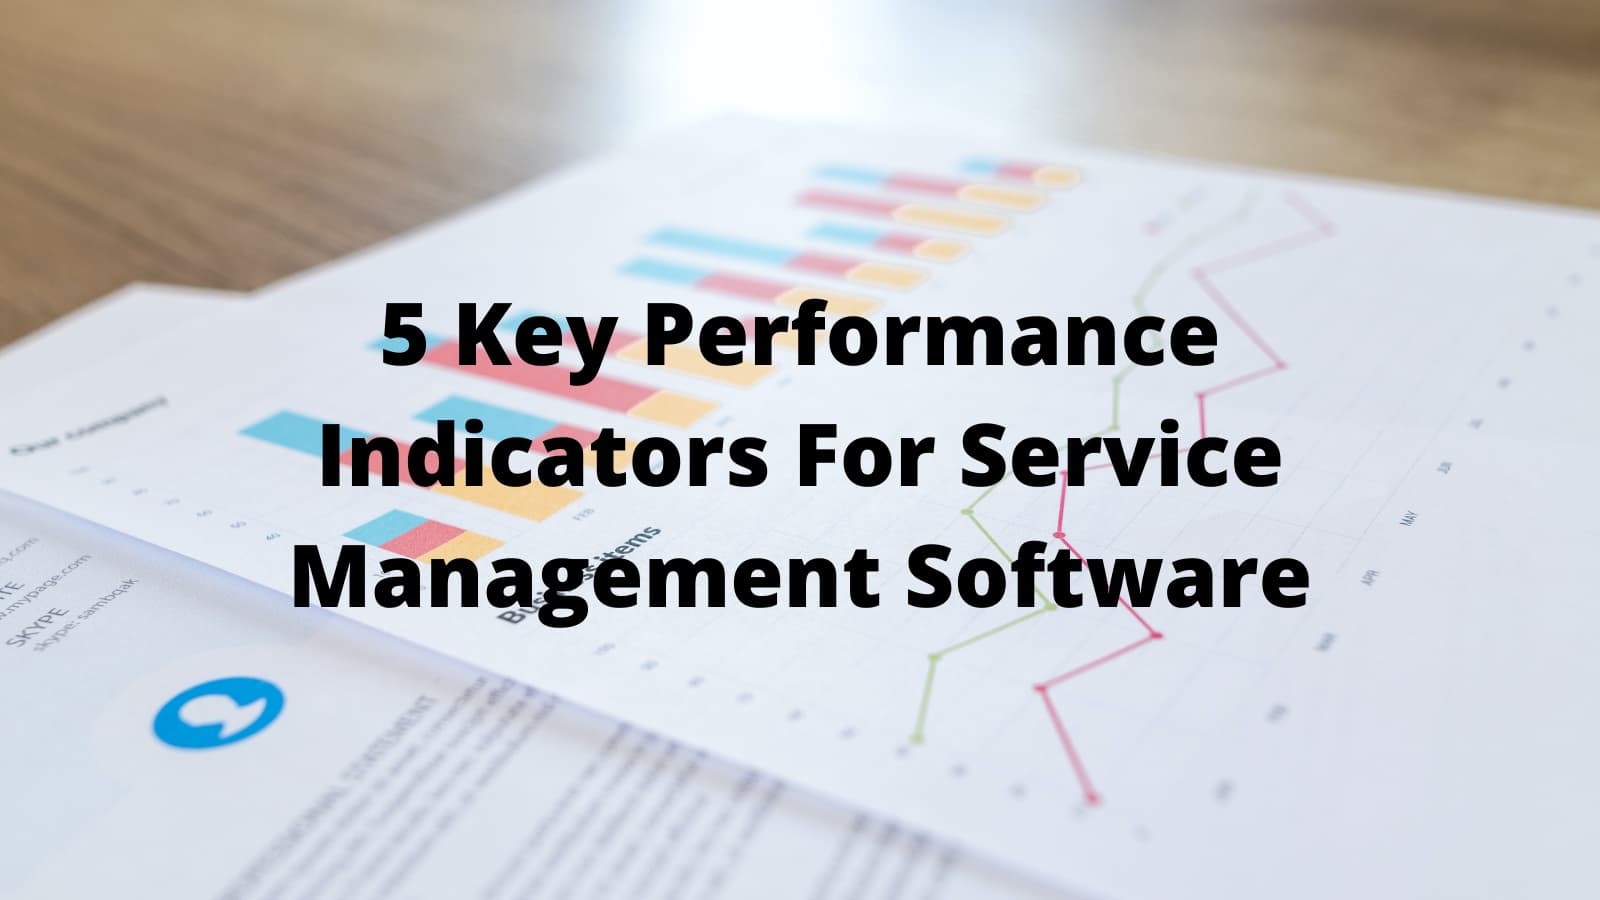 5 Key Performance Indicators For Service Management Software